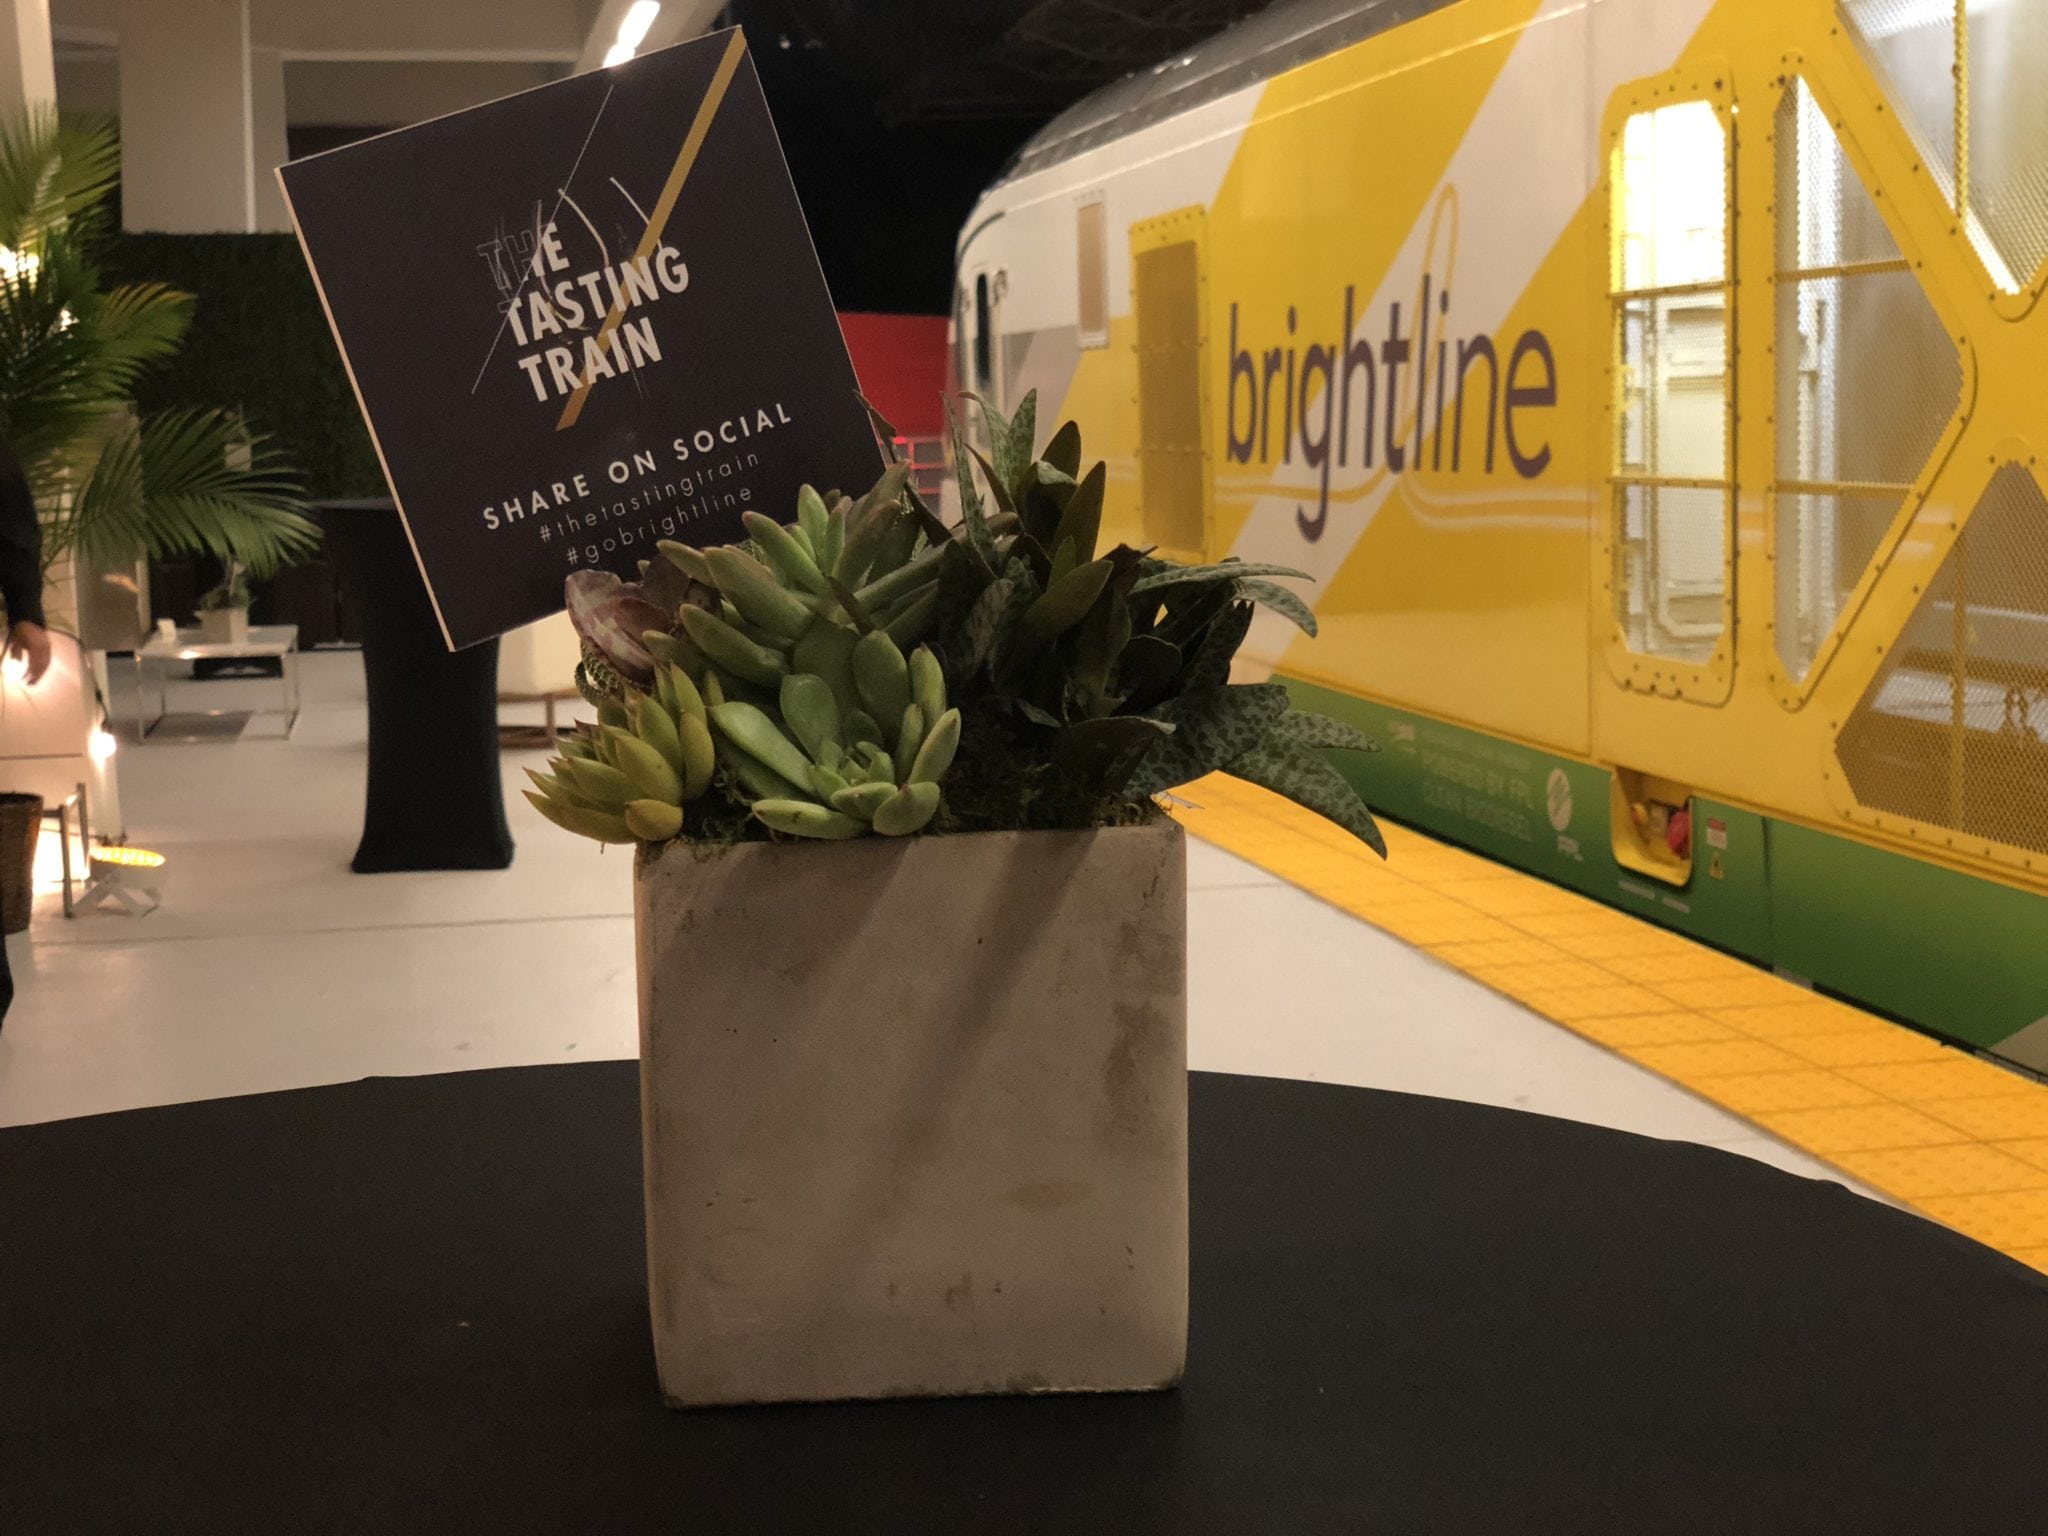 Brightline-Tasting-Train